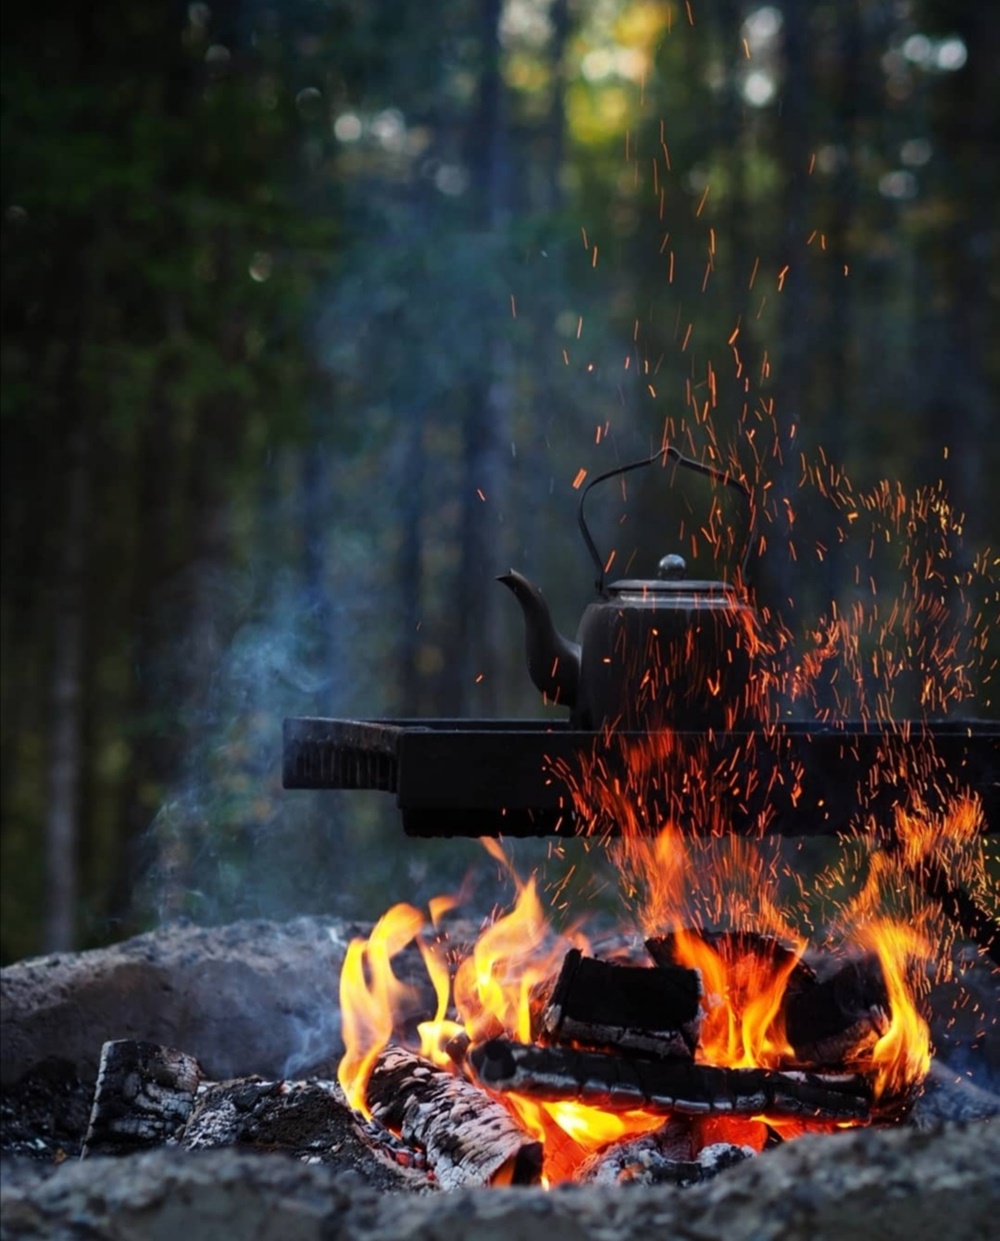 Campfire coffee